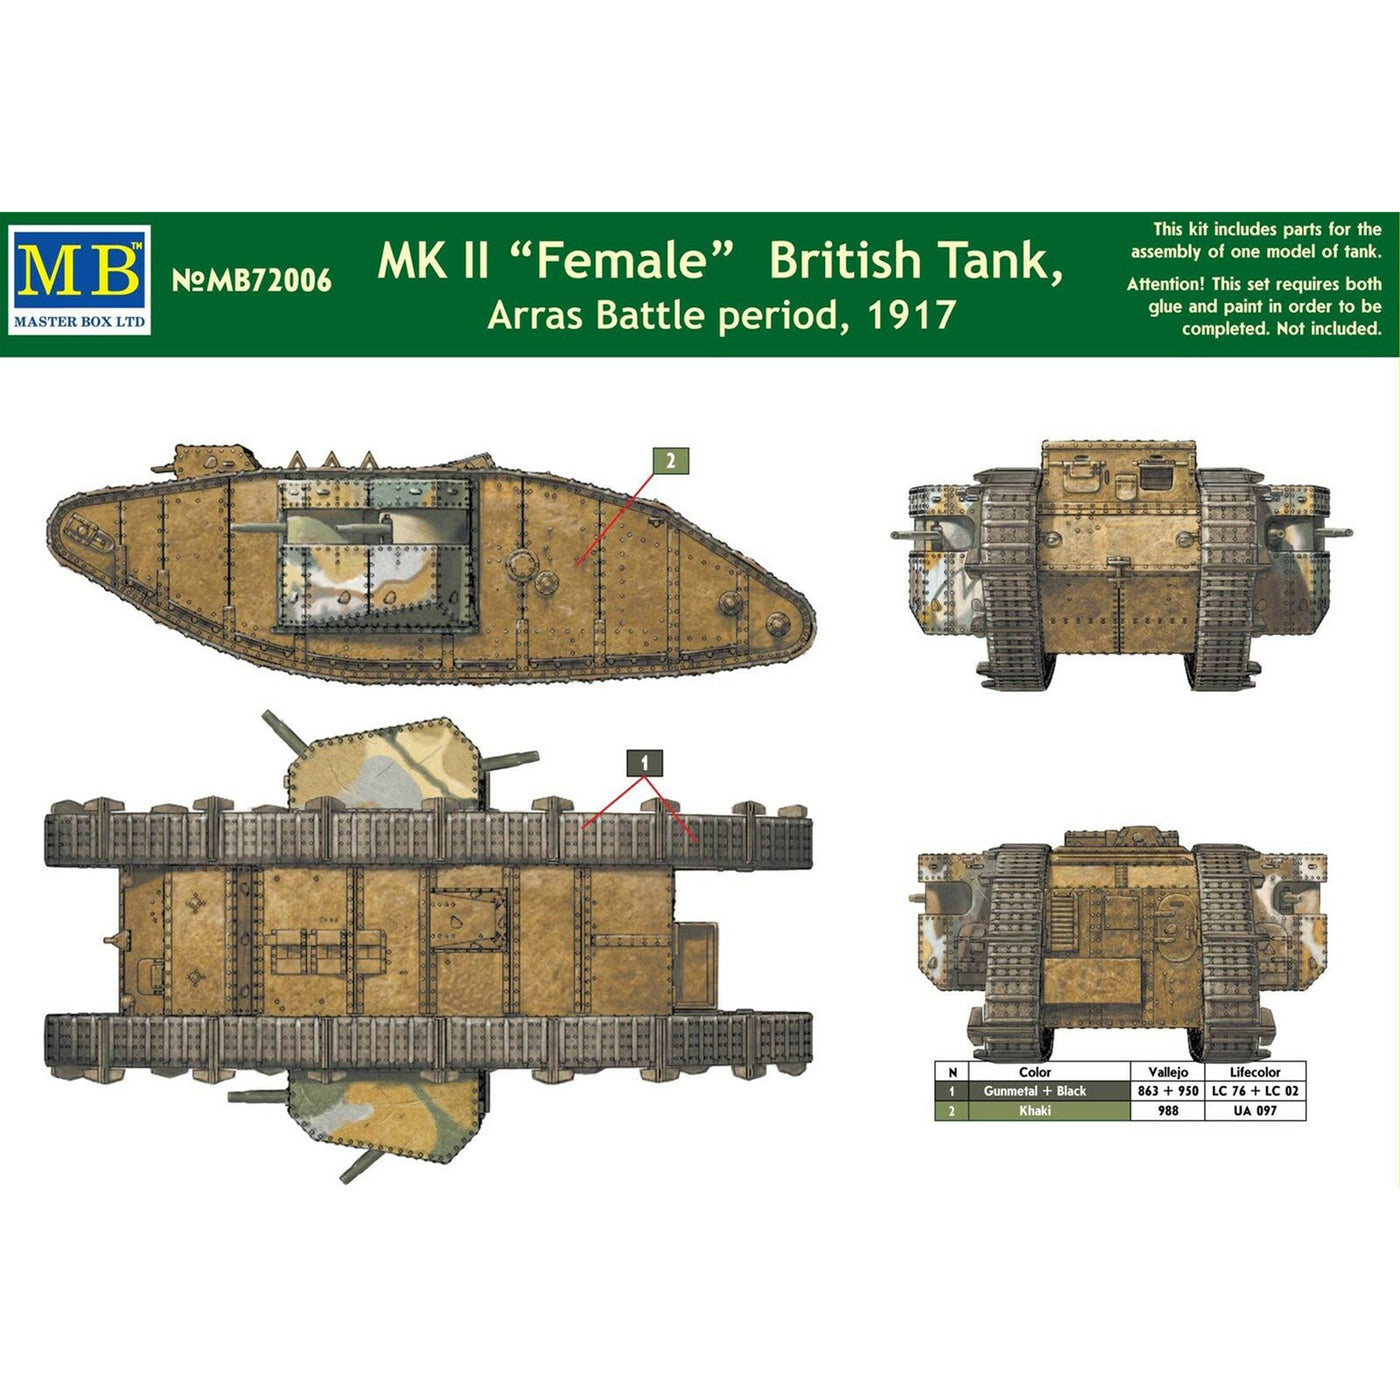 Master Box - Master Box 72006 1/72 MK II Female British Tank, Arras Battle period, 1917 Plastic Model Kit